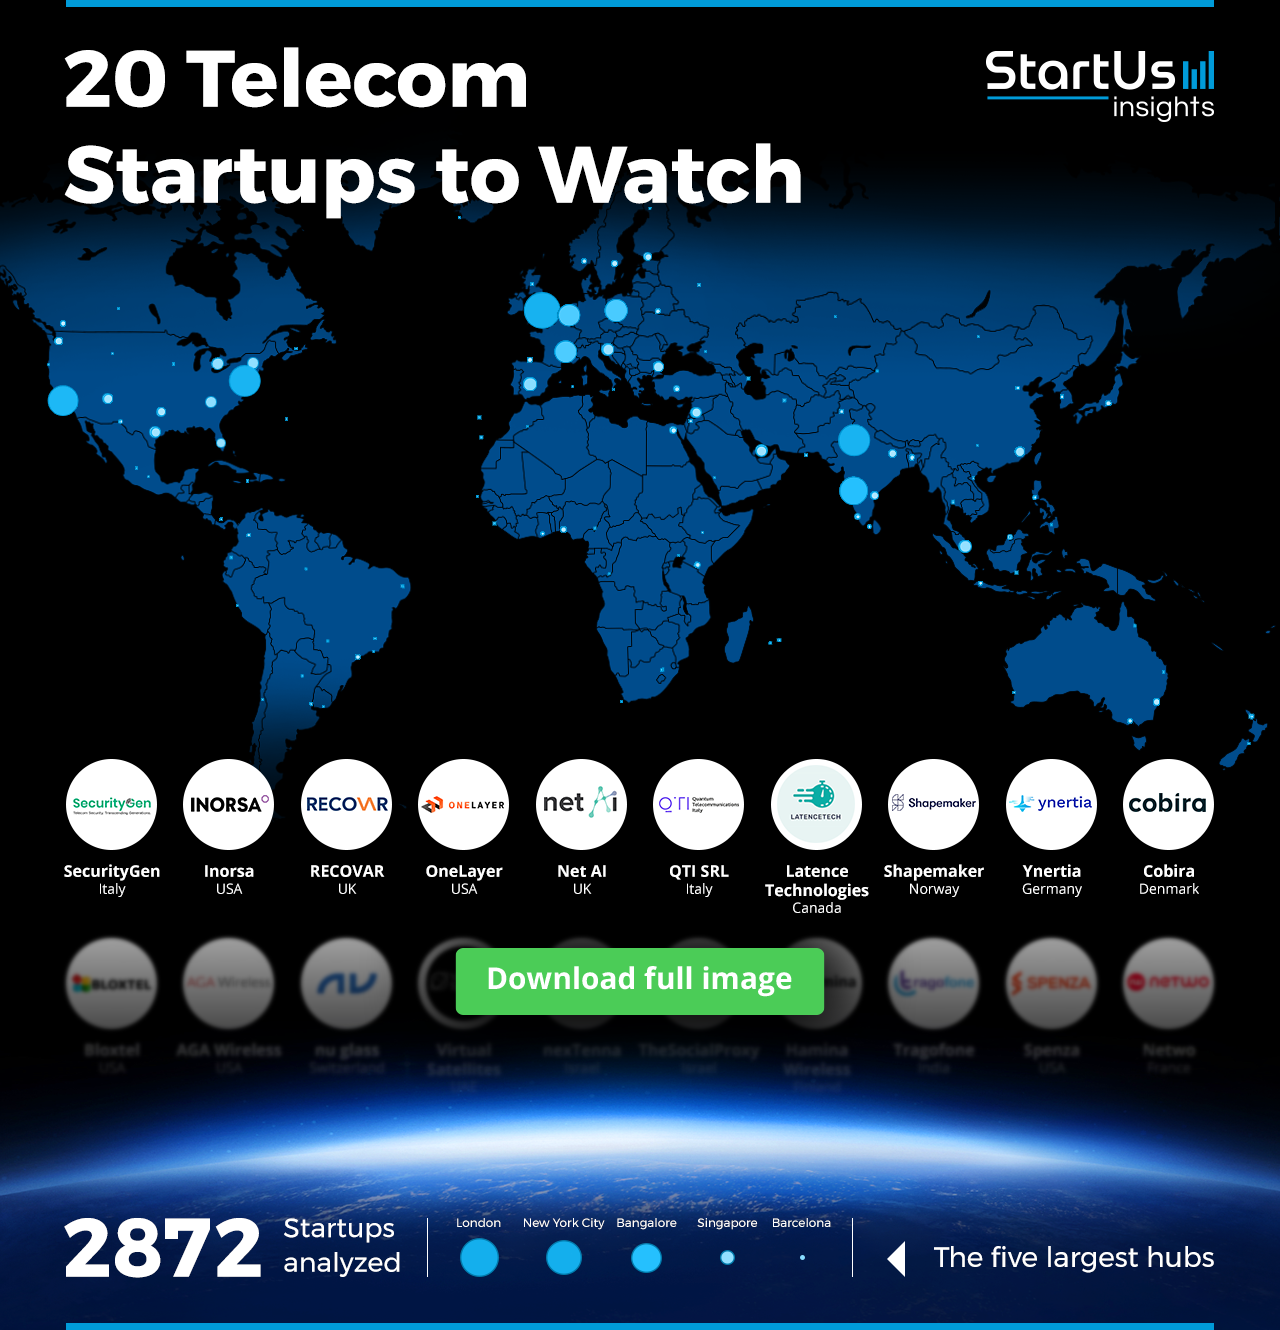 Telecom-Startups-to-Watch-Heat-Map-Blurred-StartUs-Insights-noresize